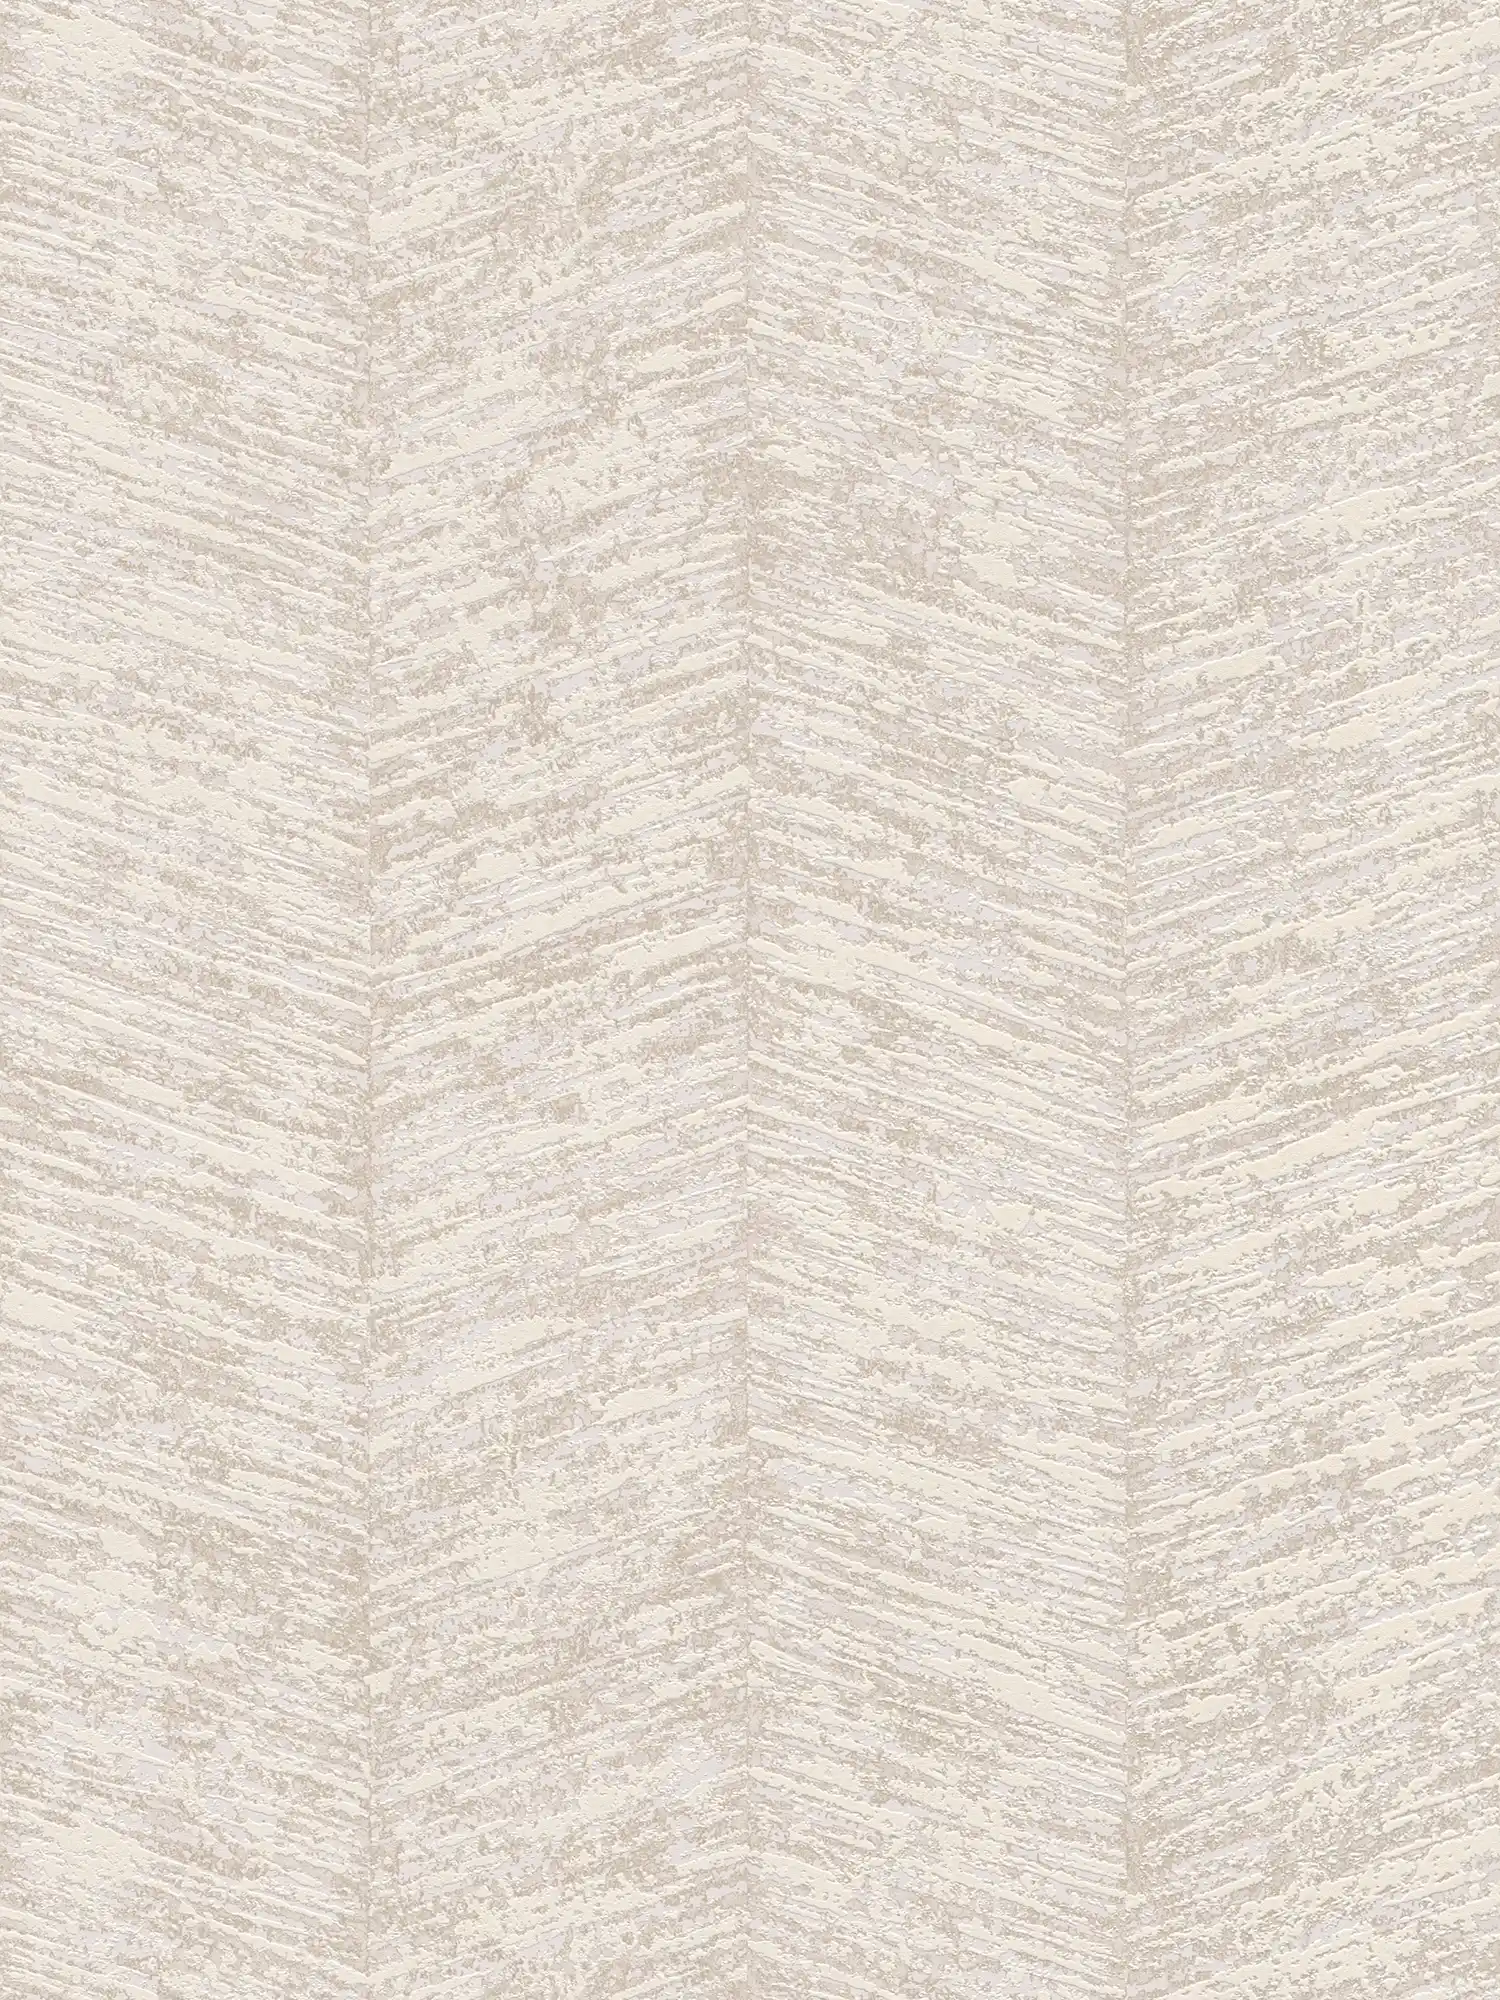 Textured wallpaper ethnic design with stripe effect - cream, metallic, beige
